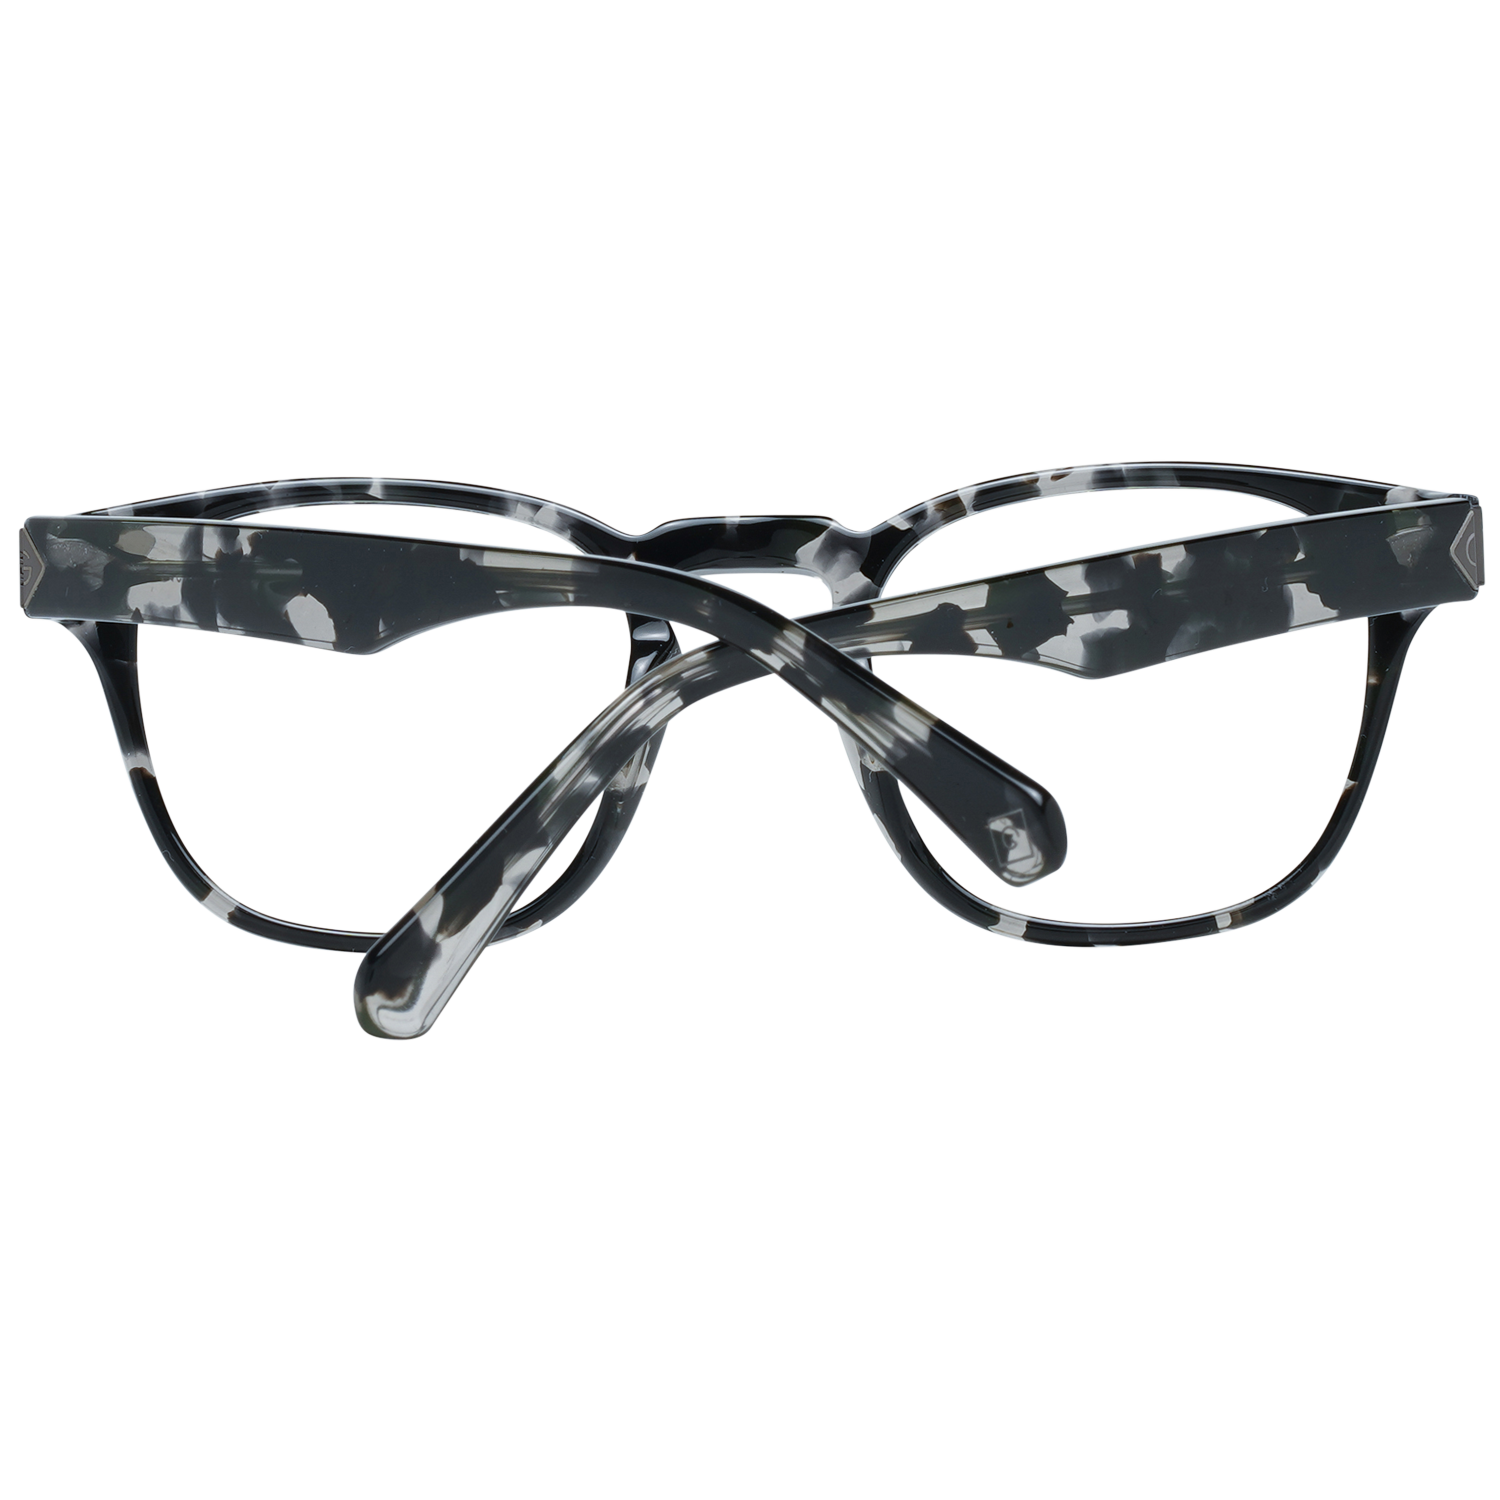 Gant Frames Gant Glasses Frames GA3219 055 51 Eyeglasses Eyewear UK USA Australia 